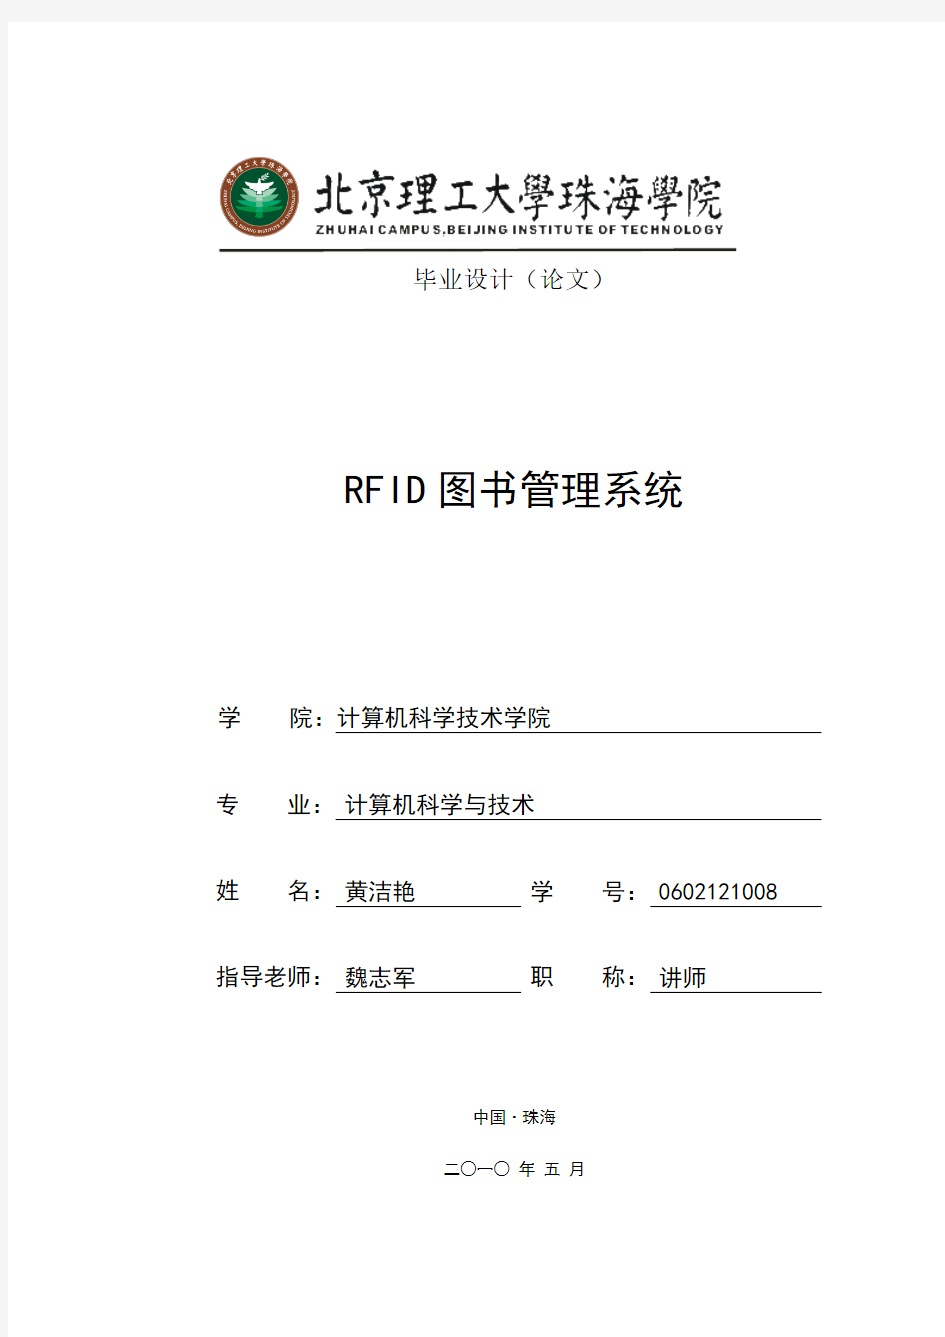 RFID图书管理系统毕业设计